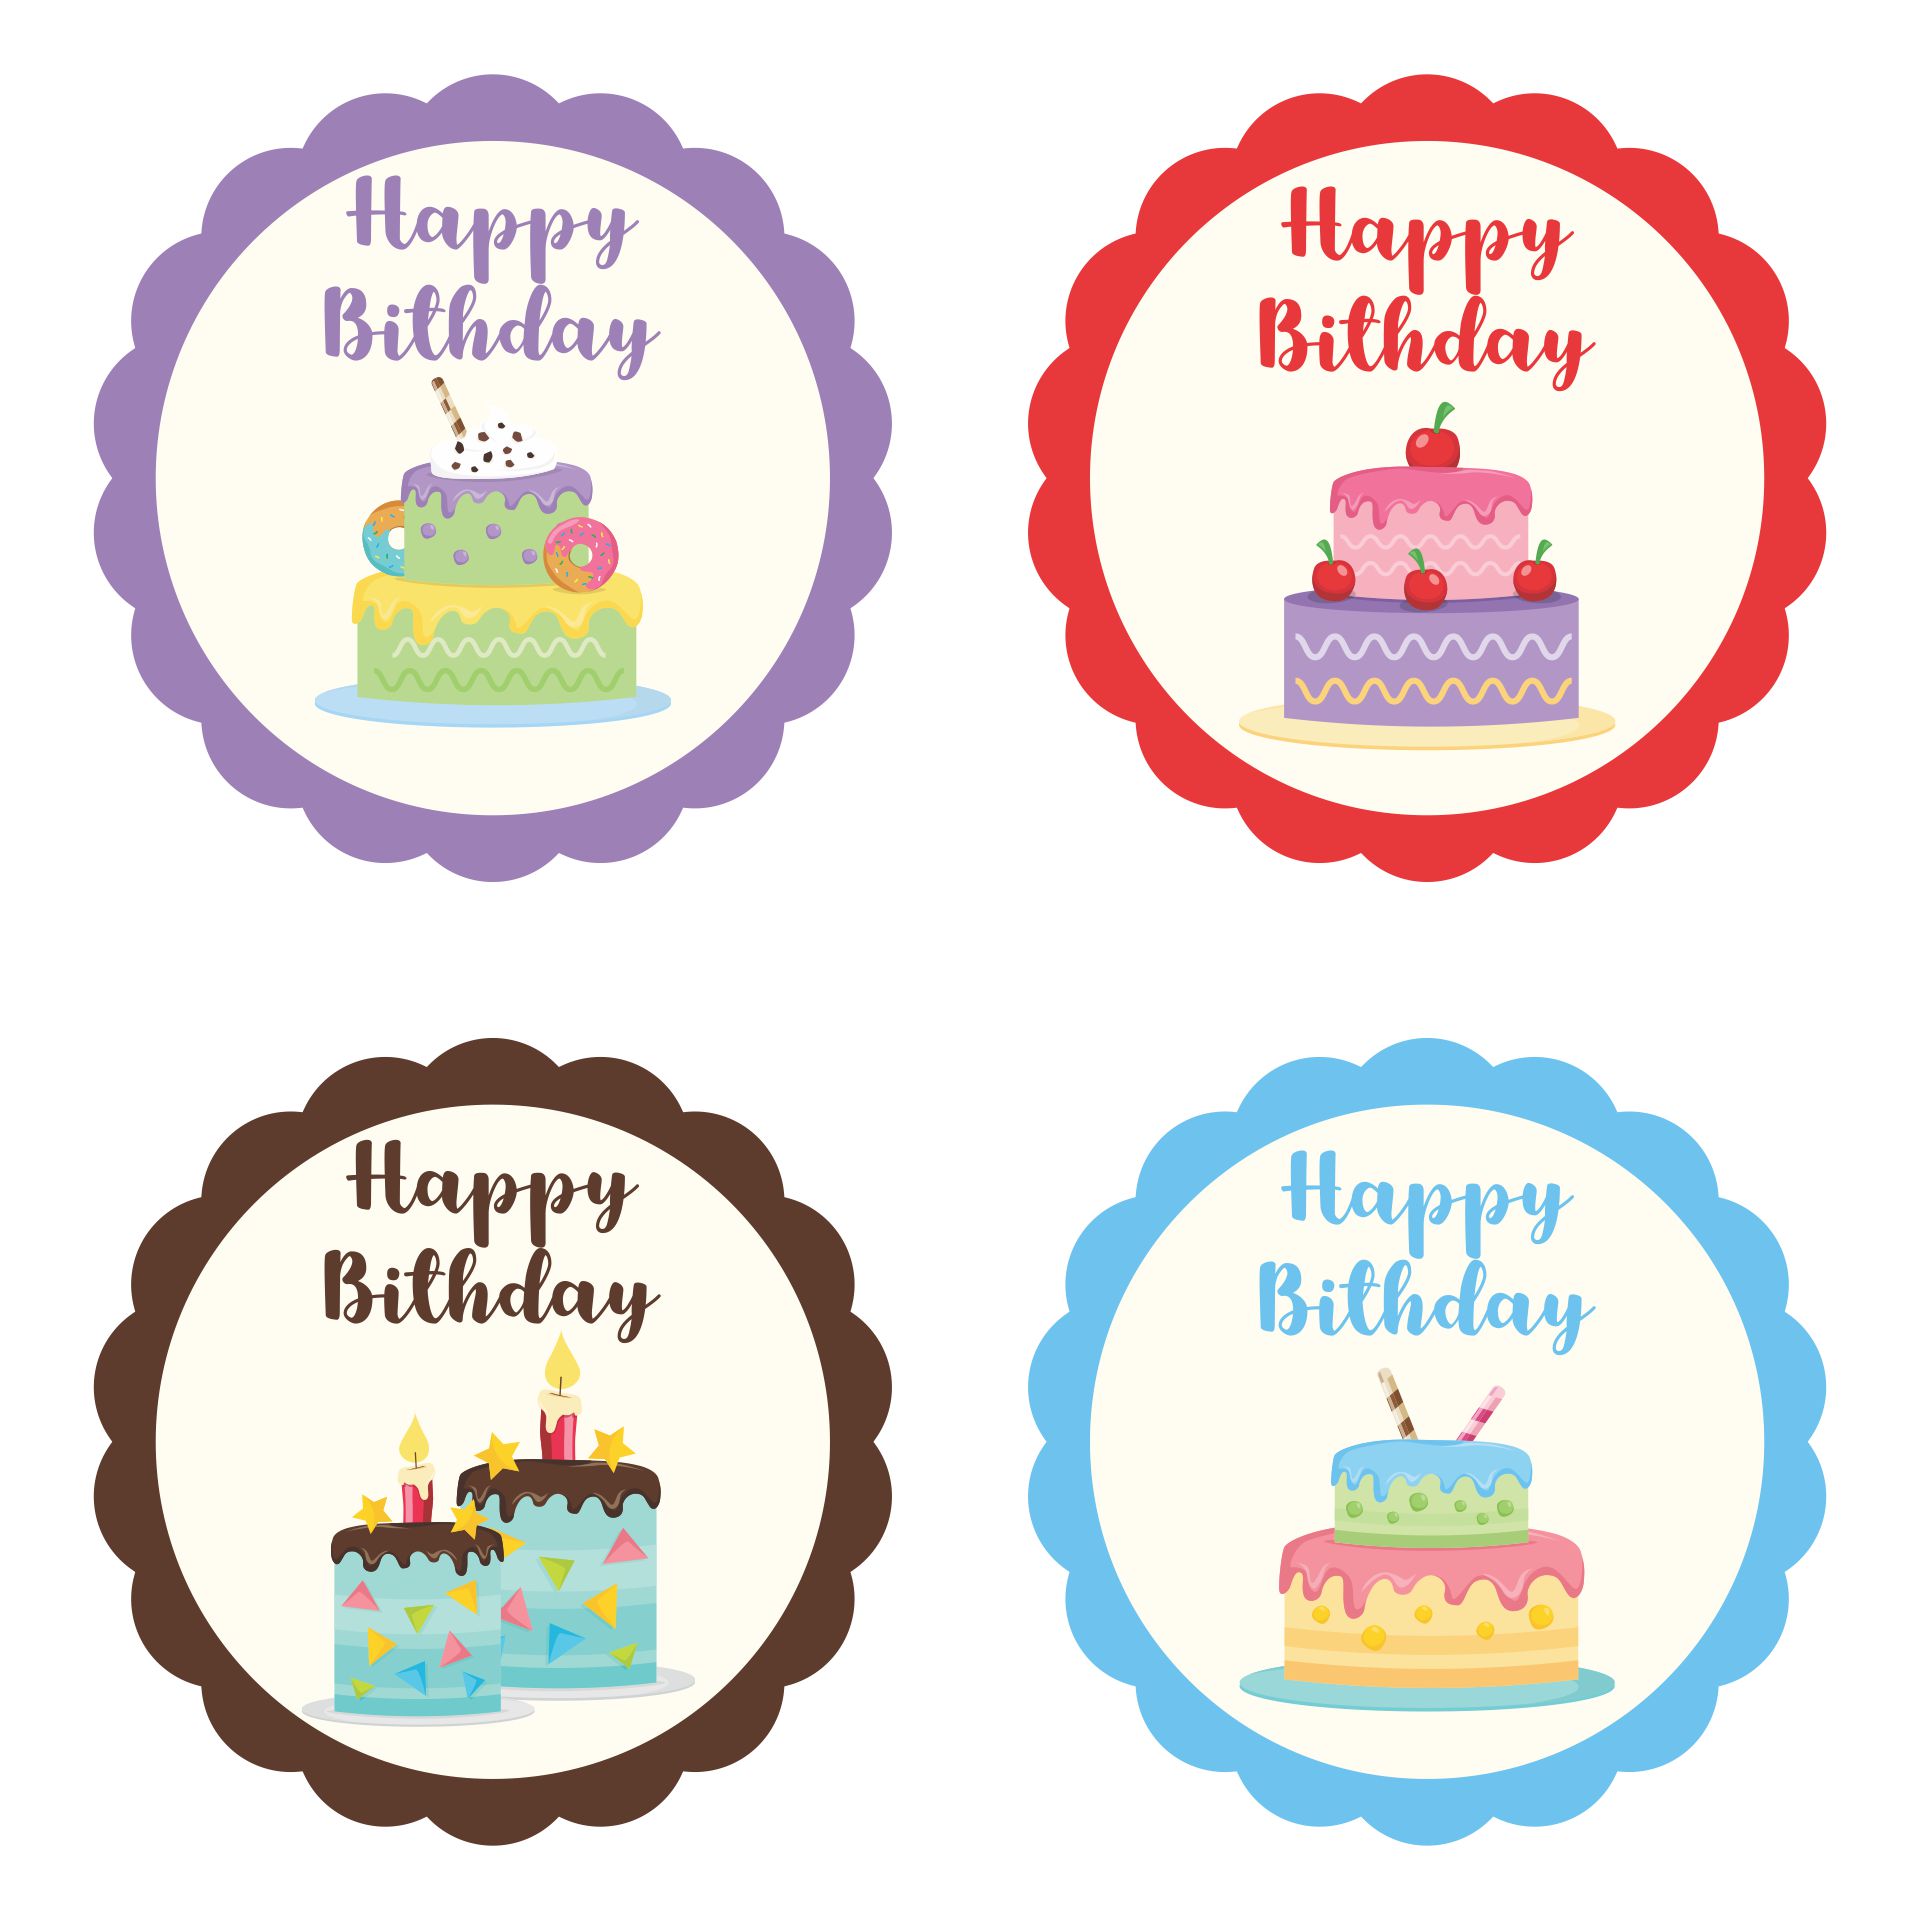 Free Printable Birthday Cupcake Template - FREE PRINTABLE TEMPLATES